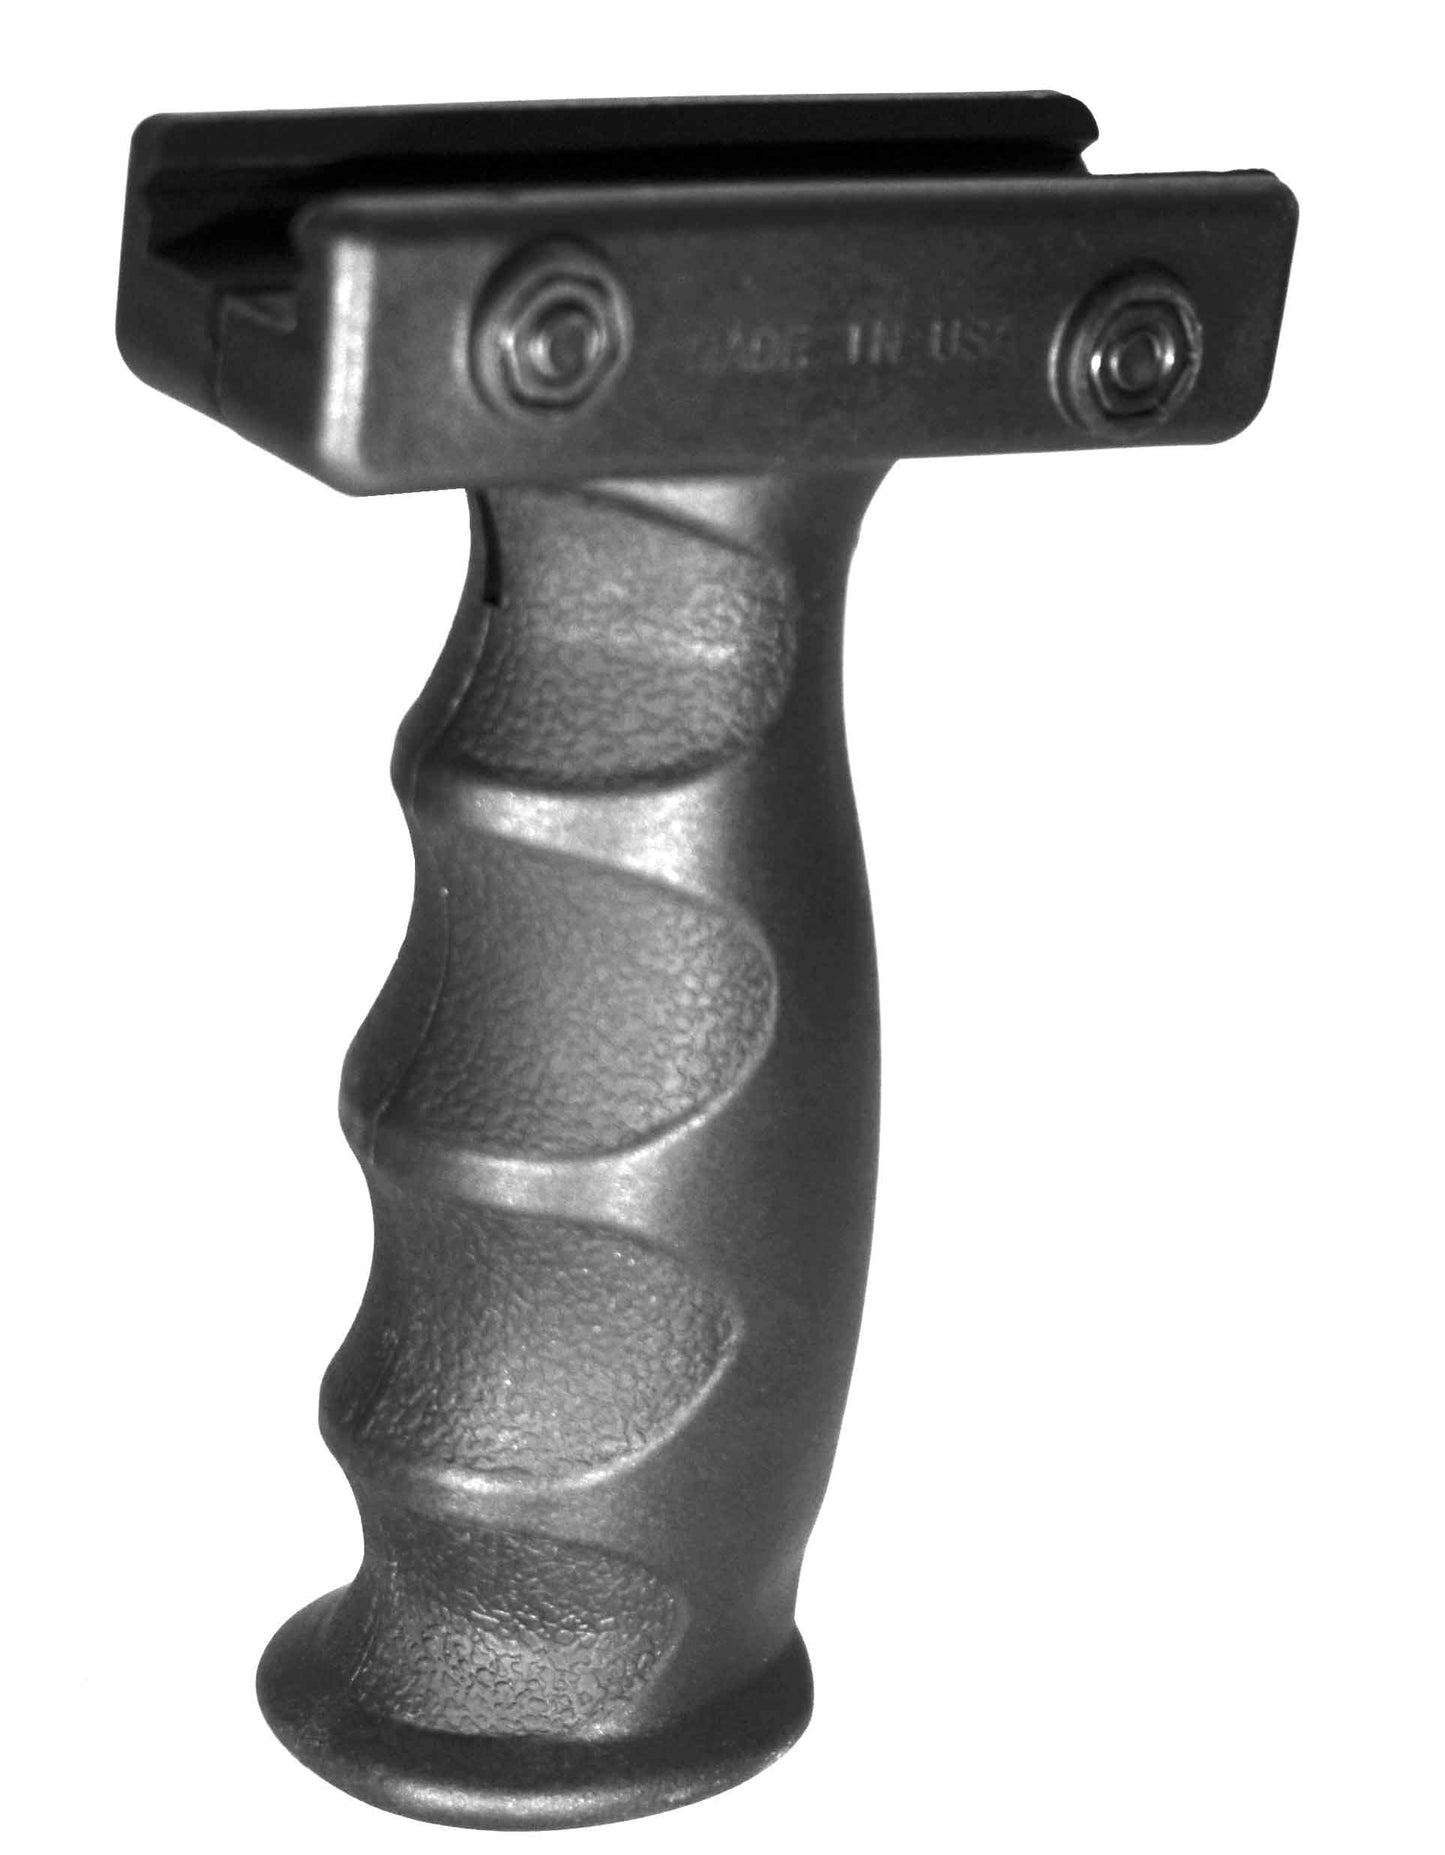 Tactical grip black for Tippmann Cronus paintball gun.